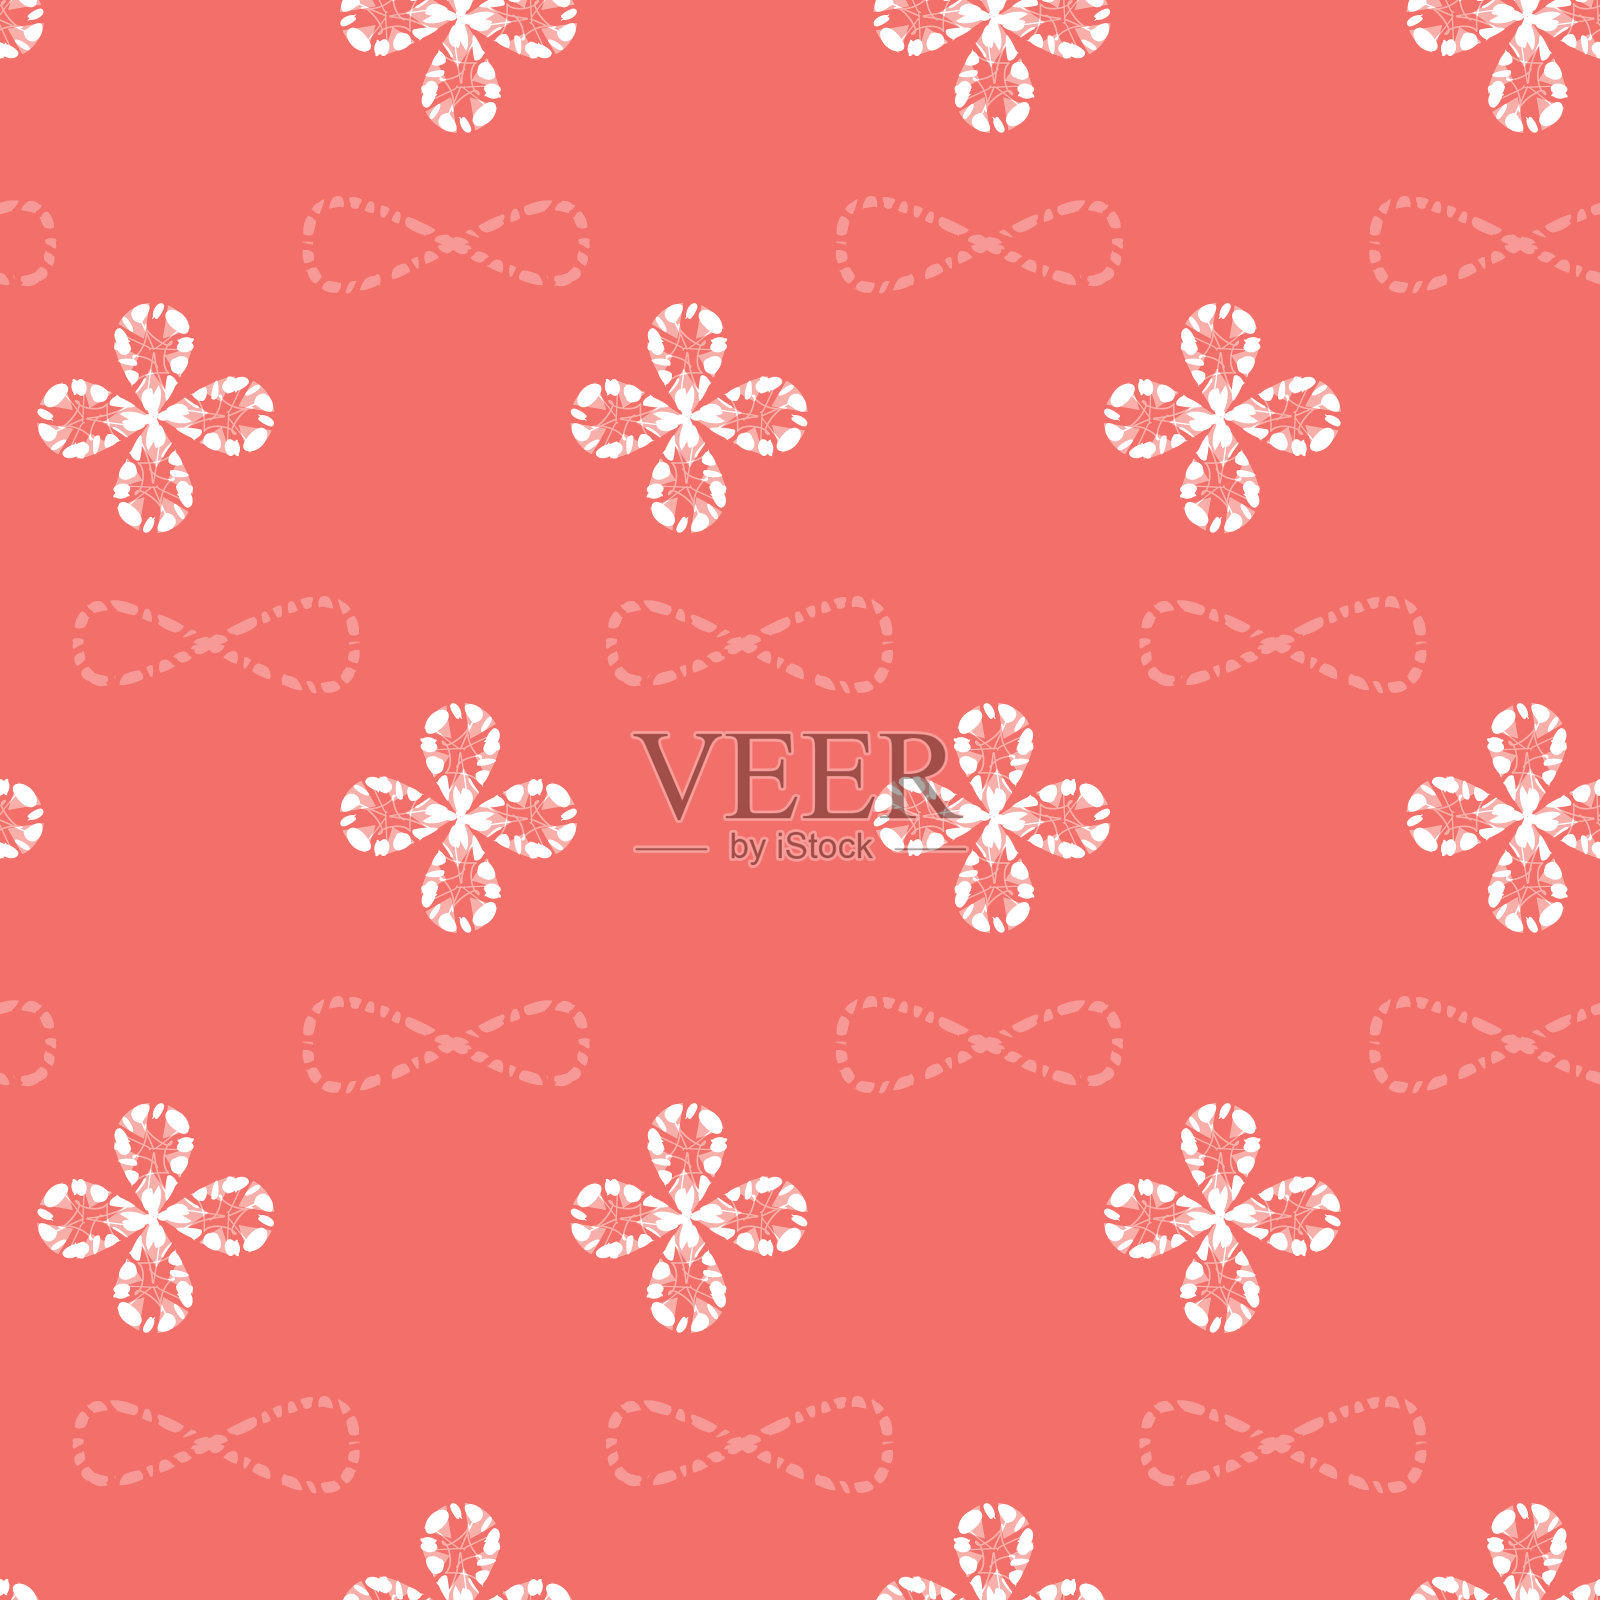 Vector红色shibori简单的小四叶三叶草图案背景。适用于纺织品、礼品包装、墙纸等。插画图片素材